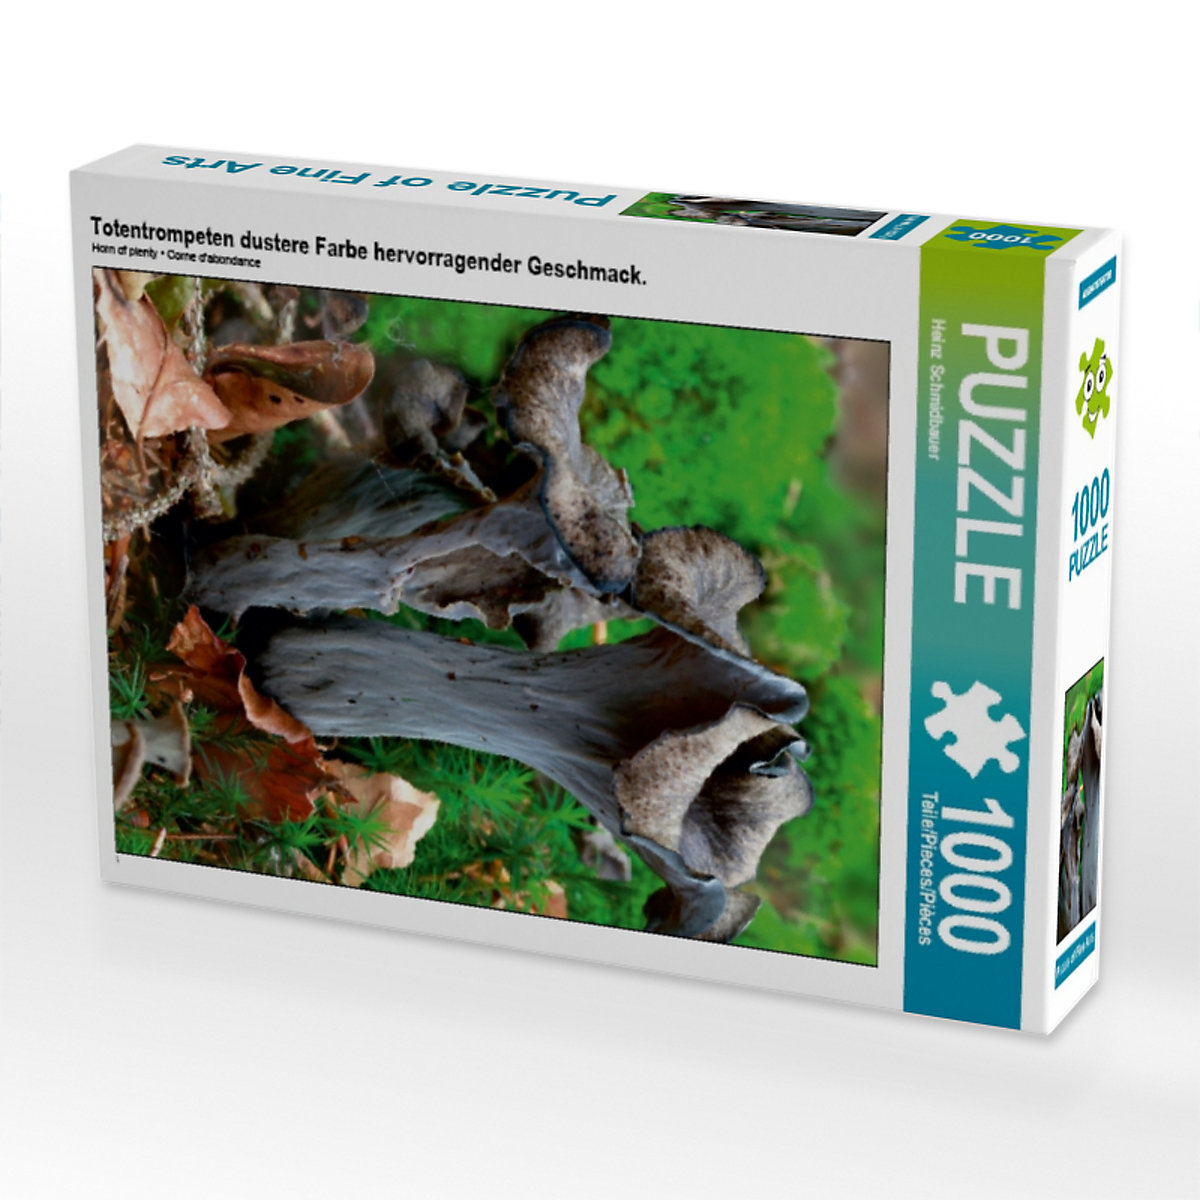 CALVENDO® Puzzle CALVENDO Puzzle Totentrompeten dustere Farbe hervorragender Geschmack. 1000 Teile Foto-Puzzle für glückliche Stunden